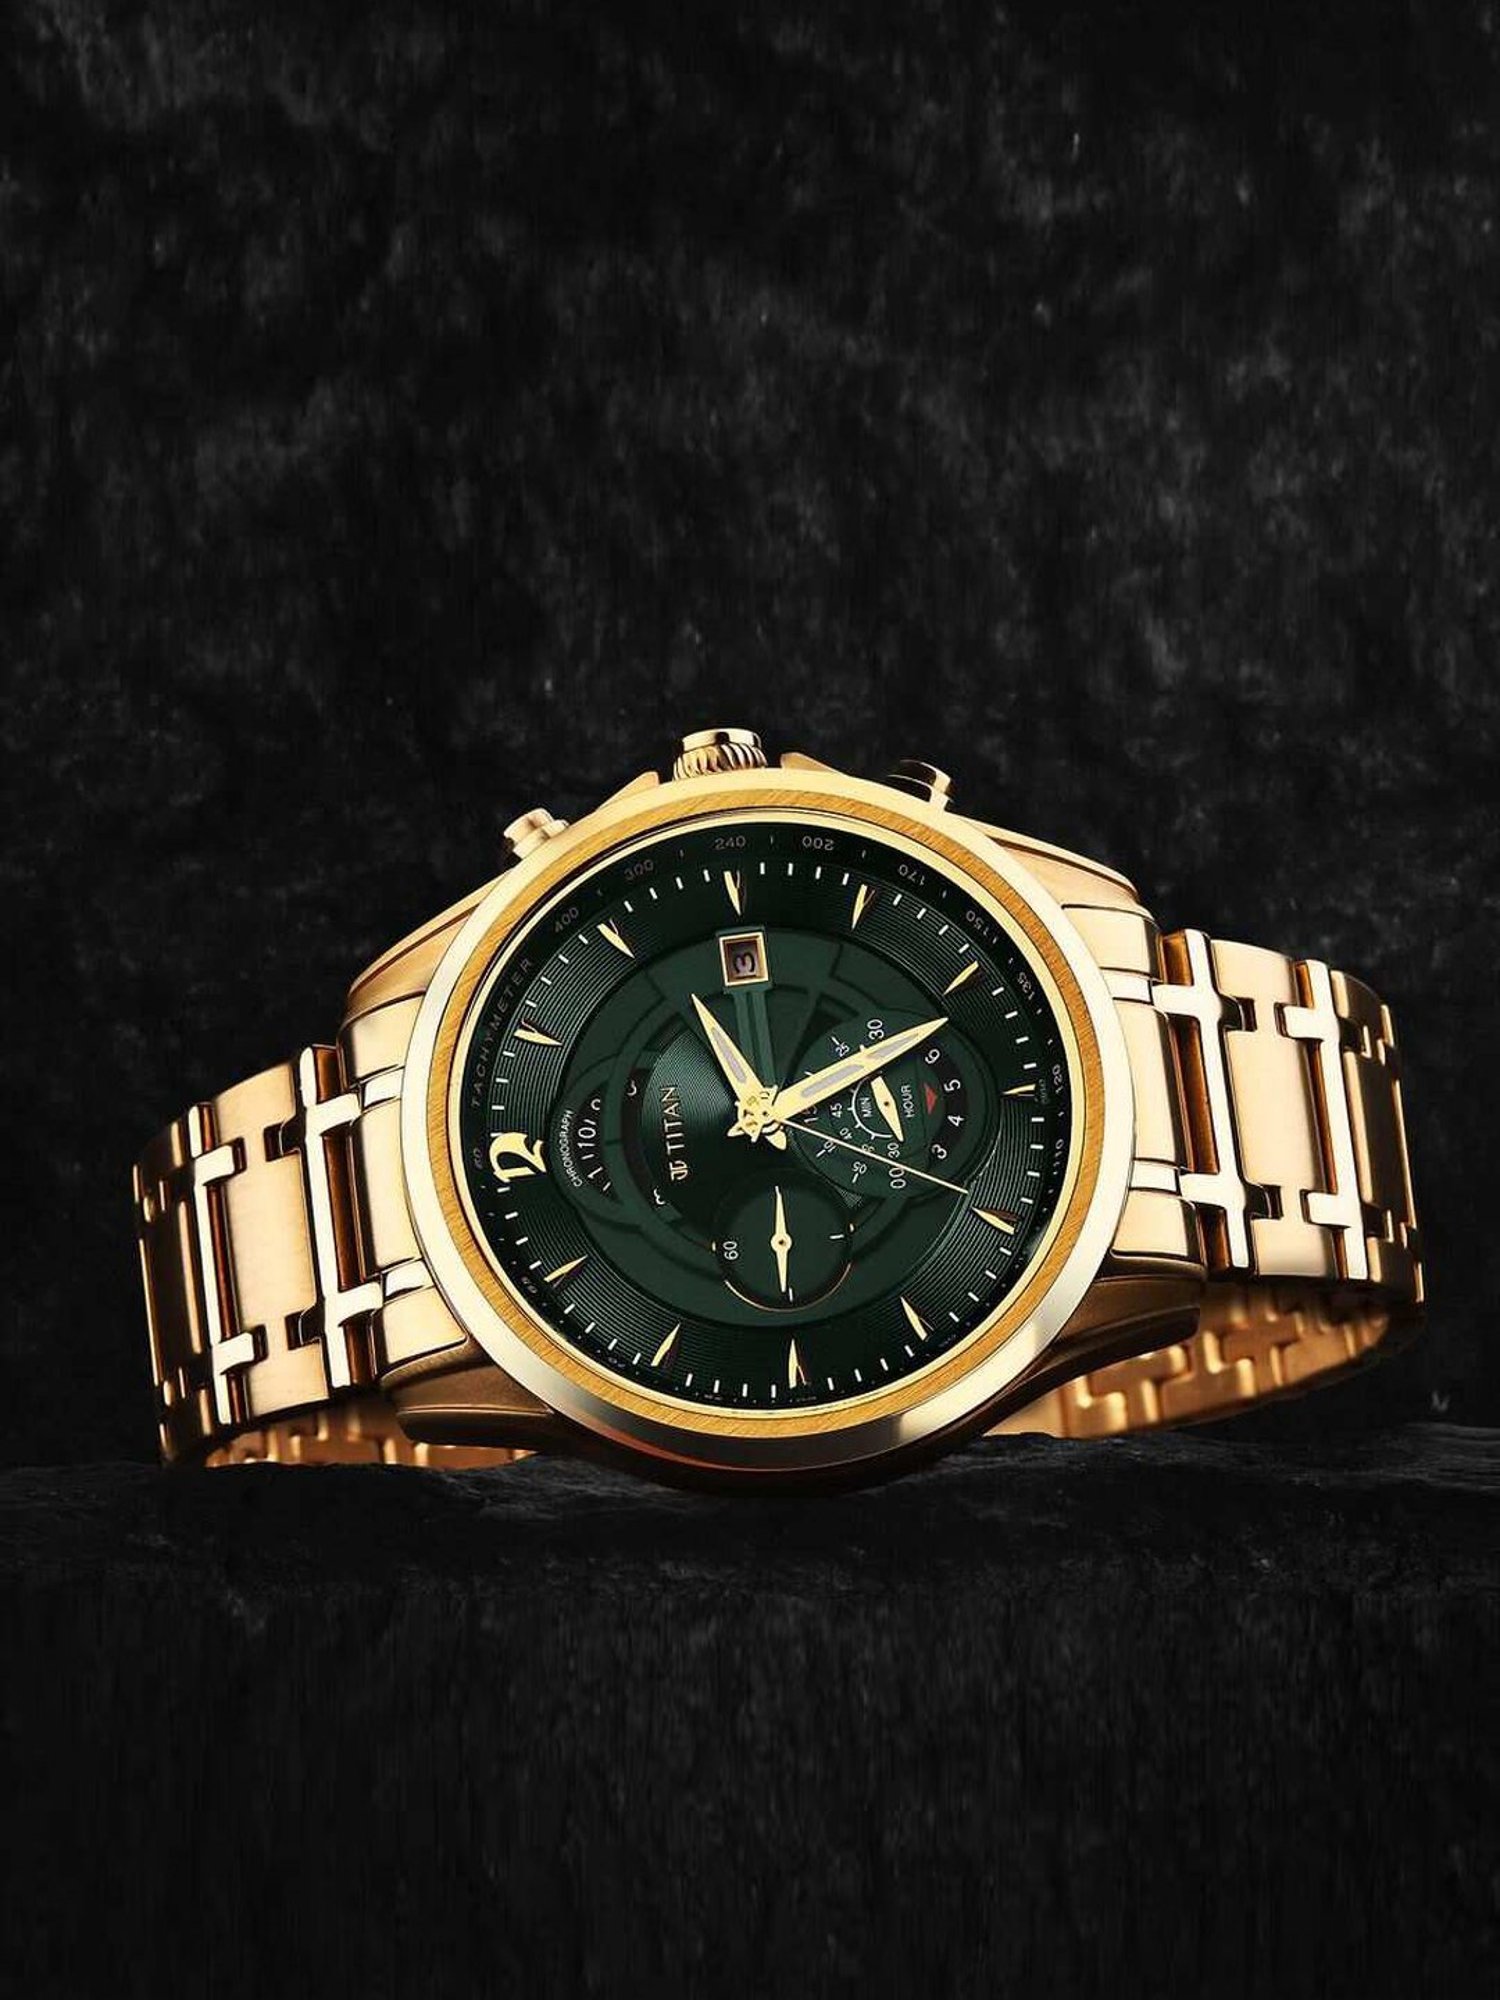 Introducing Audemars Piguet's 2021 Collection of Watches - Revolution Watch